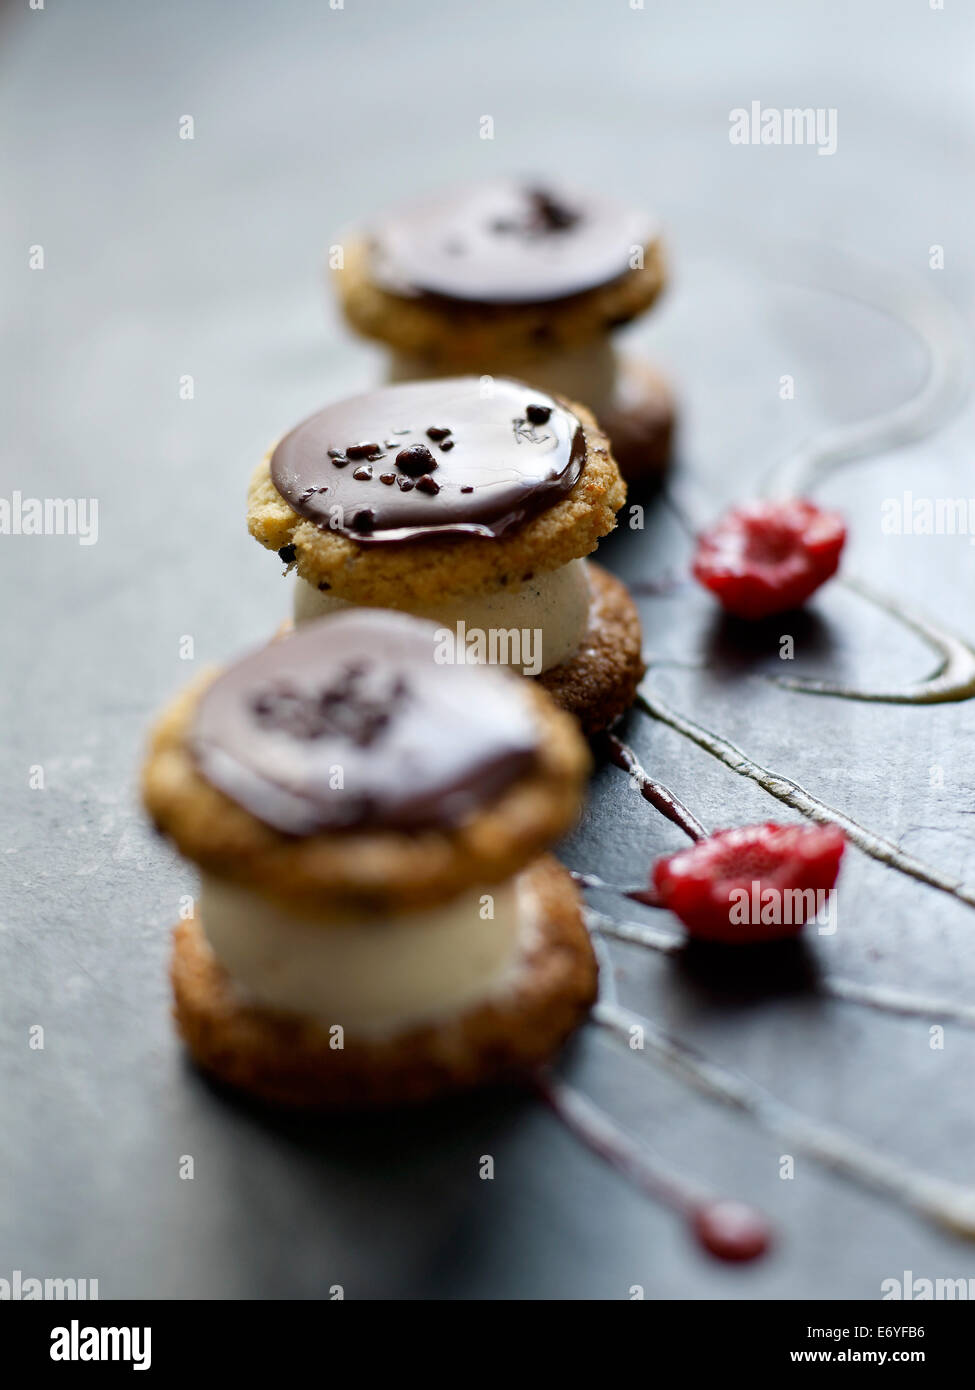 Profiterole-style chocolate cookie and vanilla ice cream dessert Stock Photo